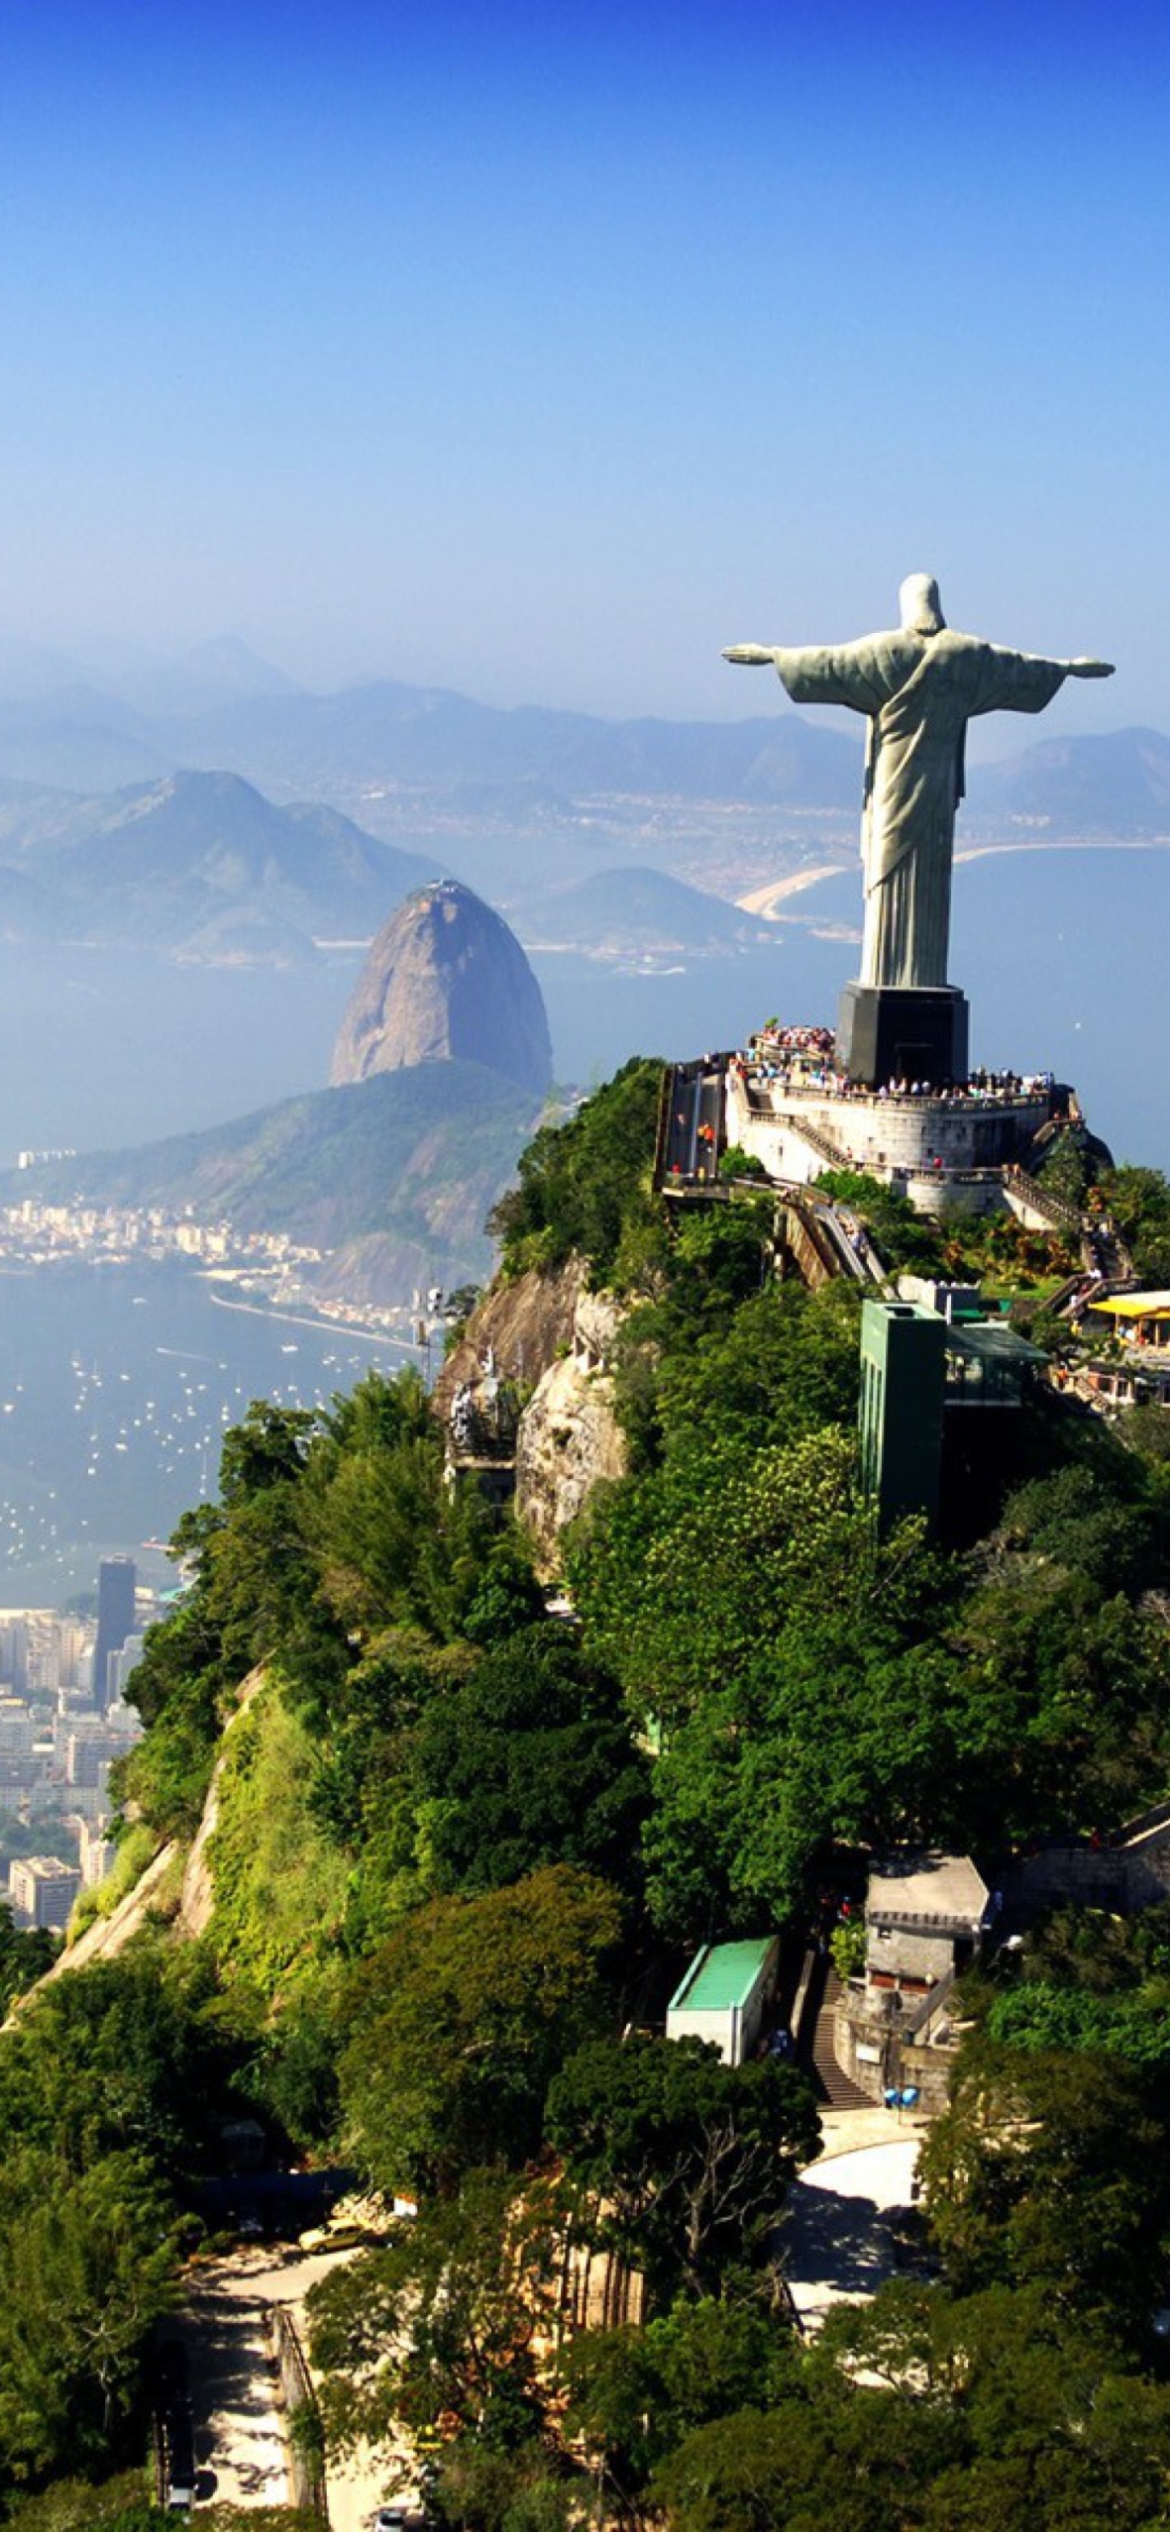 Обои Christ Statue In Rio De Janeiro 1170x2532